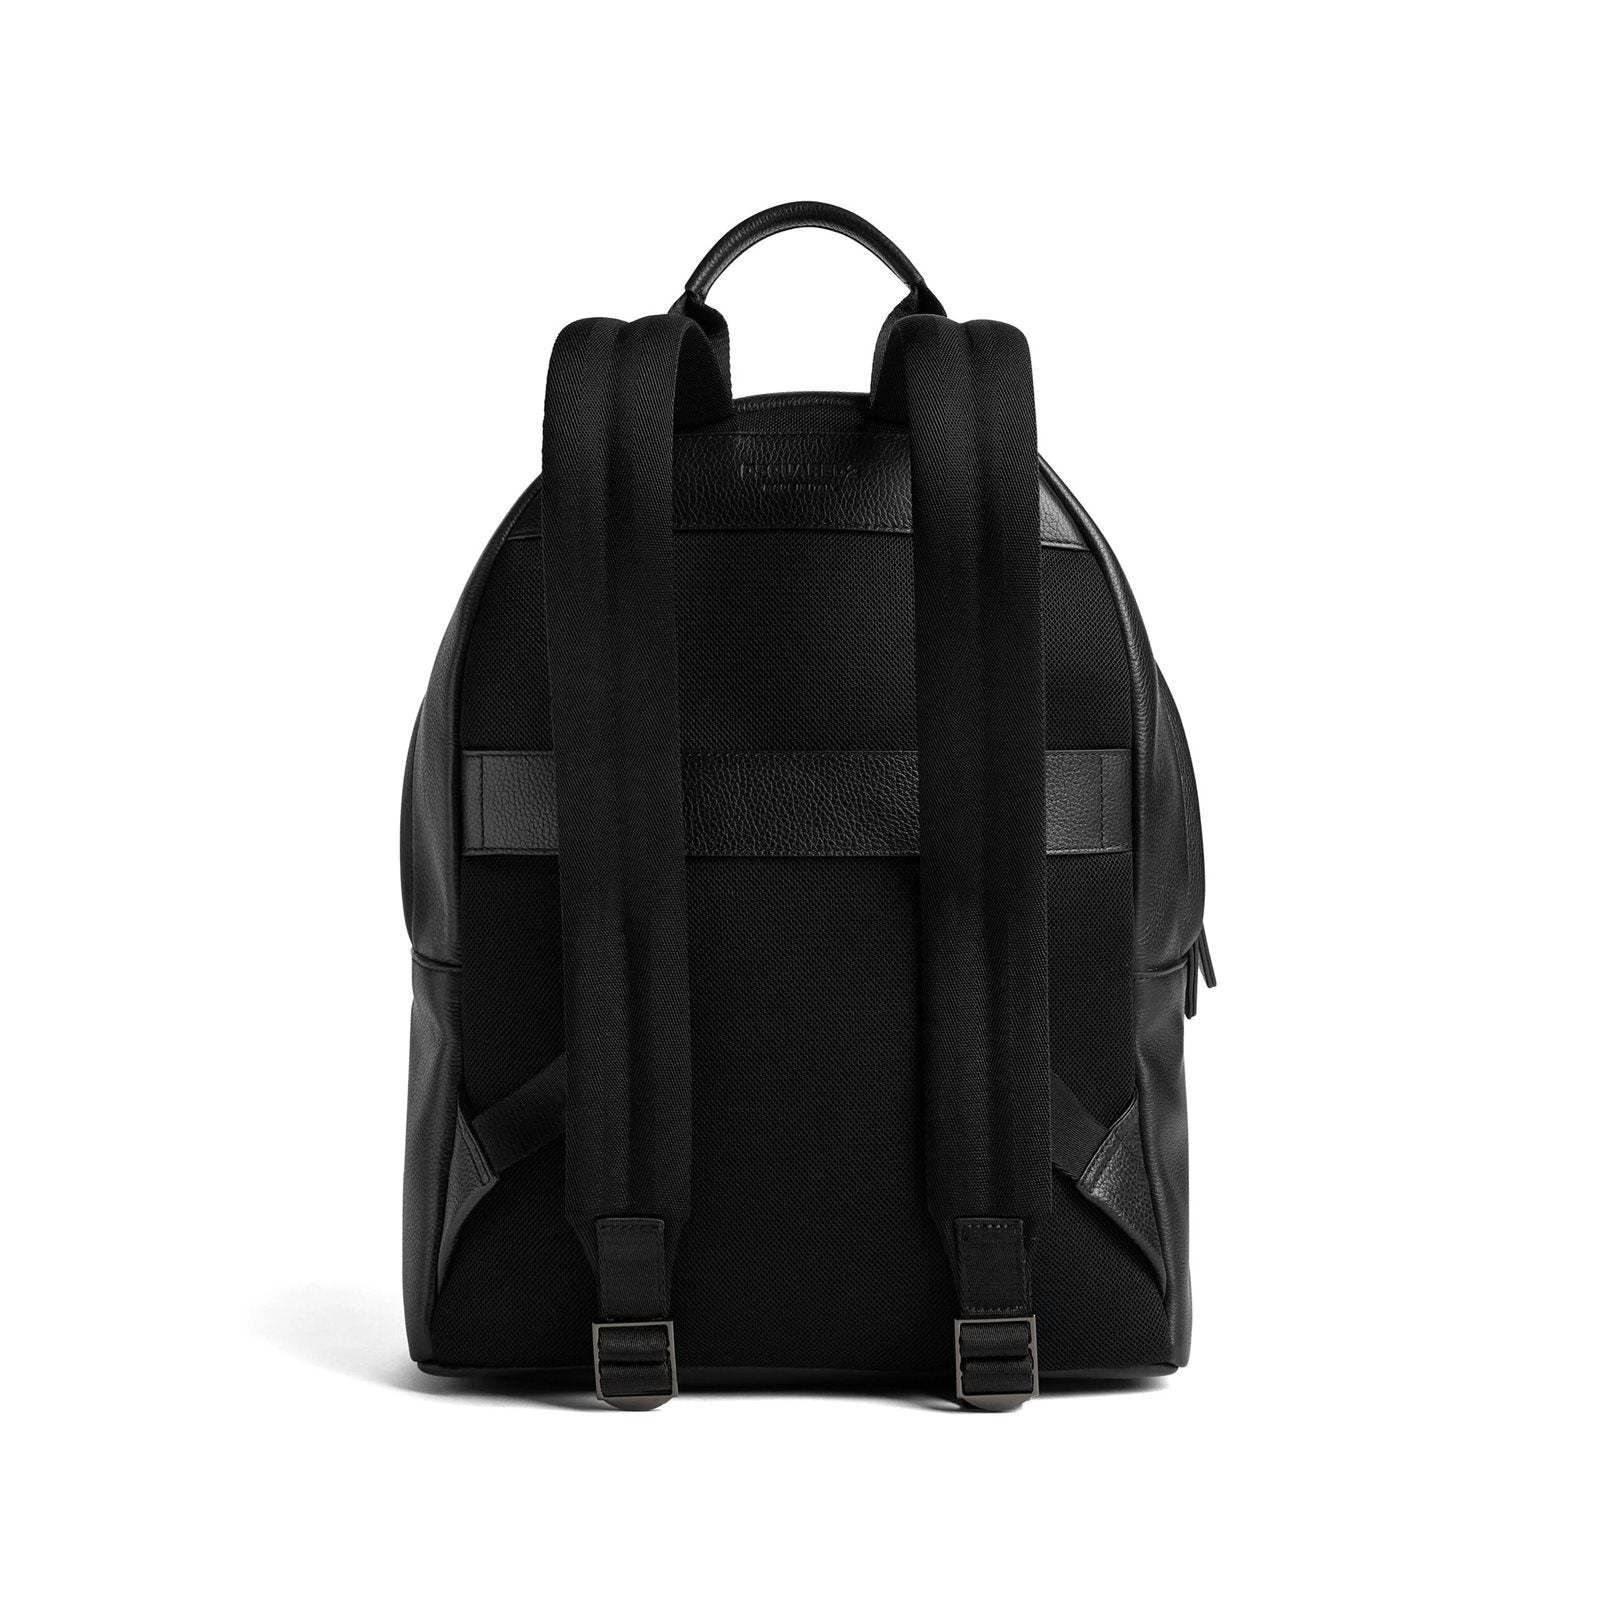 Bob leather backpack